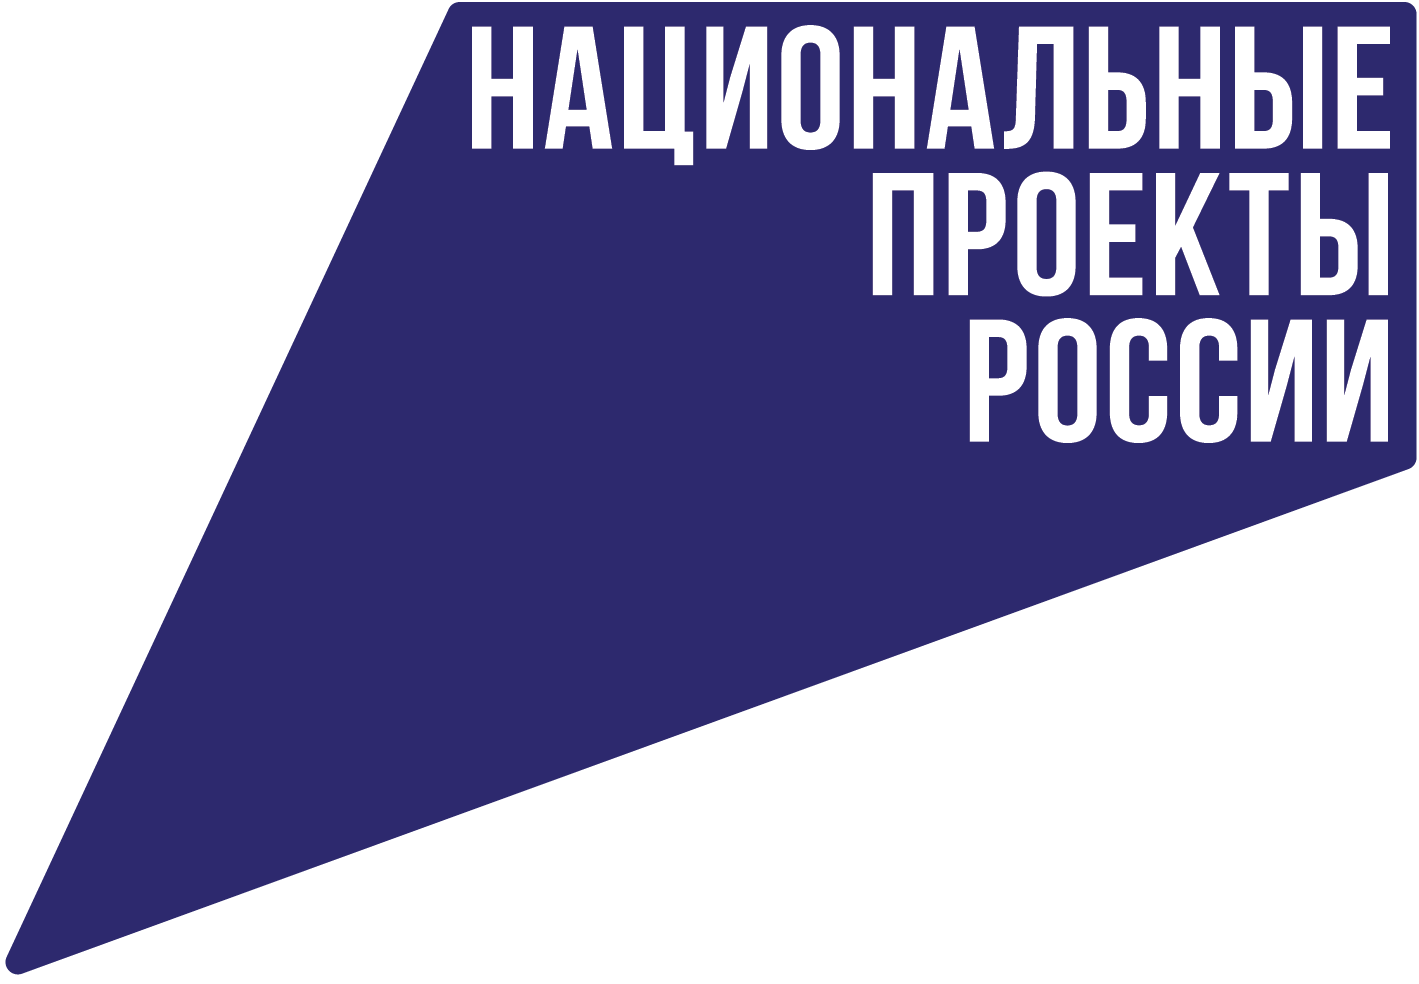 Https://www.kamgov.ru/national-project